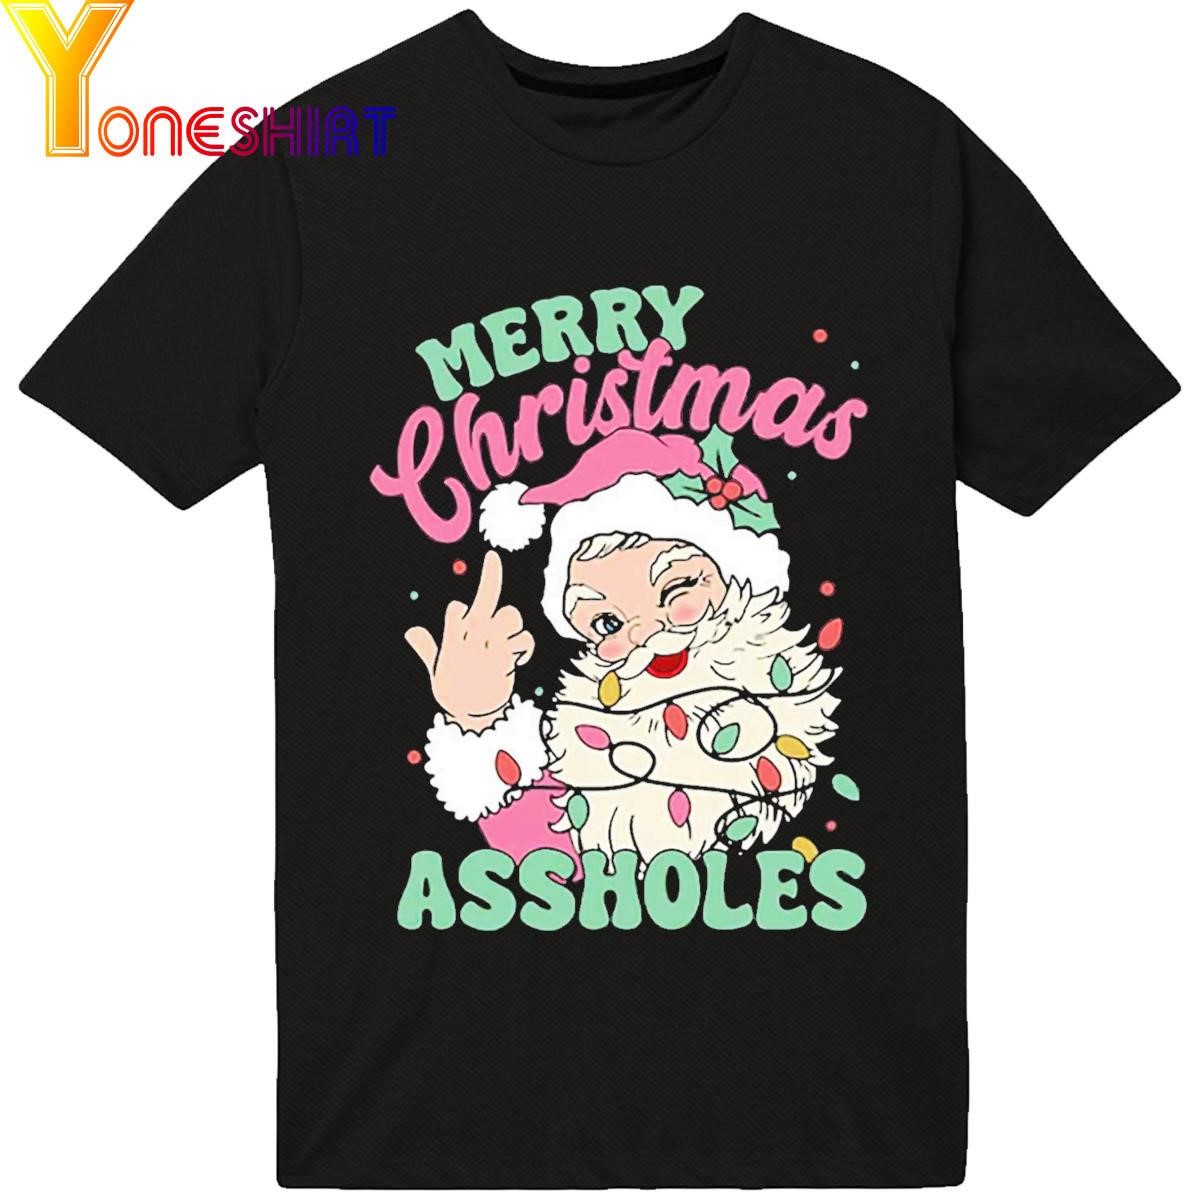 Merry Christmas Assholes Funny T-Shirt